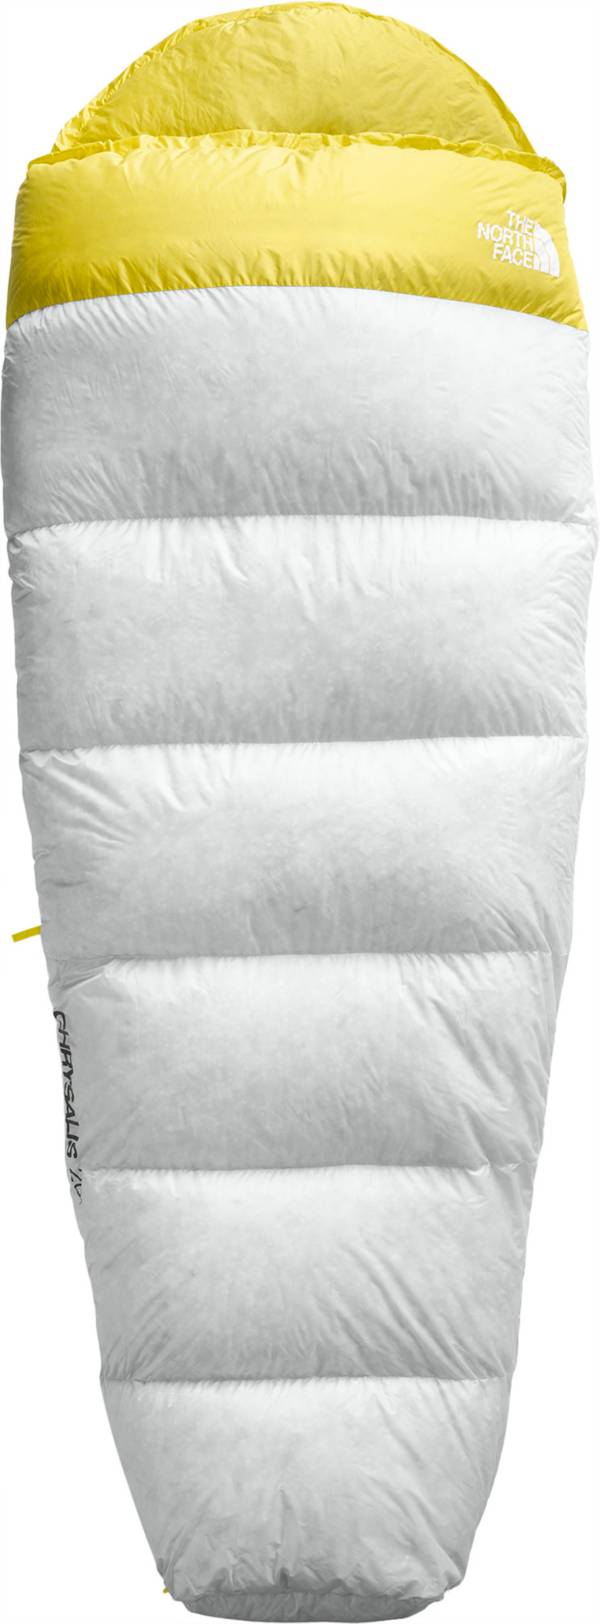 The North Face Chrysalis 20 Sleeping Bag product image